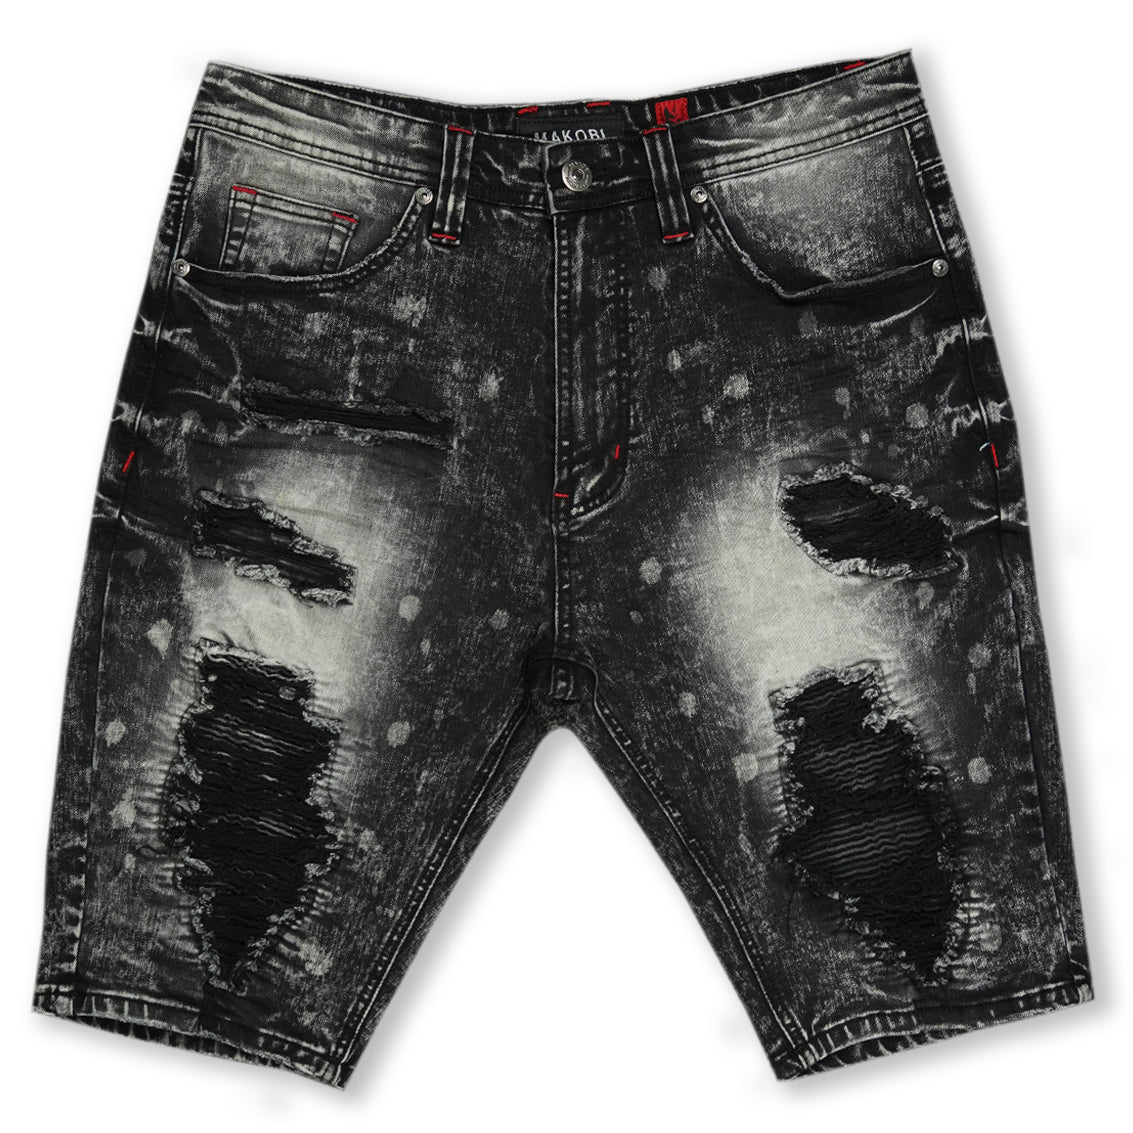 M771 Pacifica Shredded Shorts - Black Wash